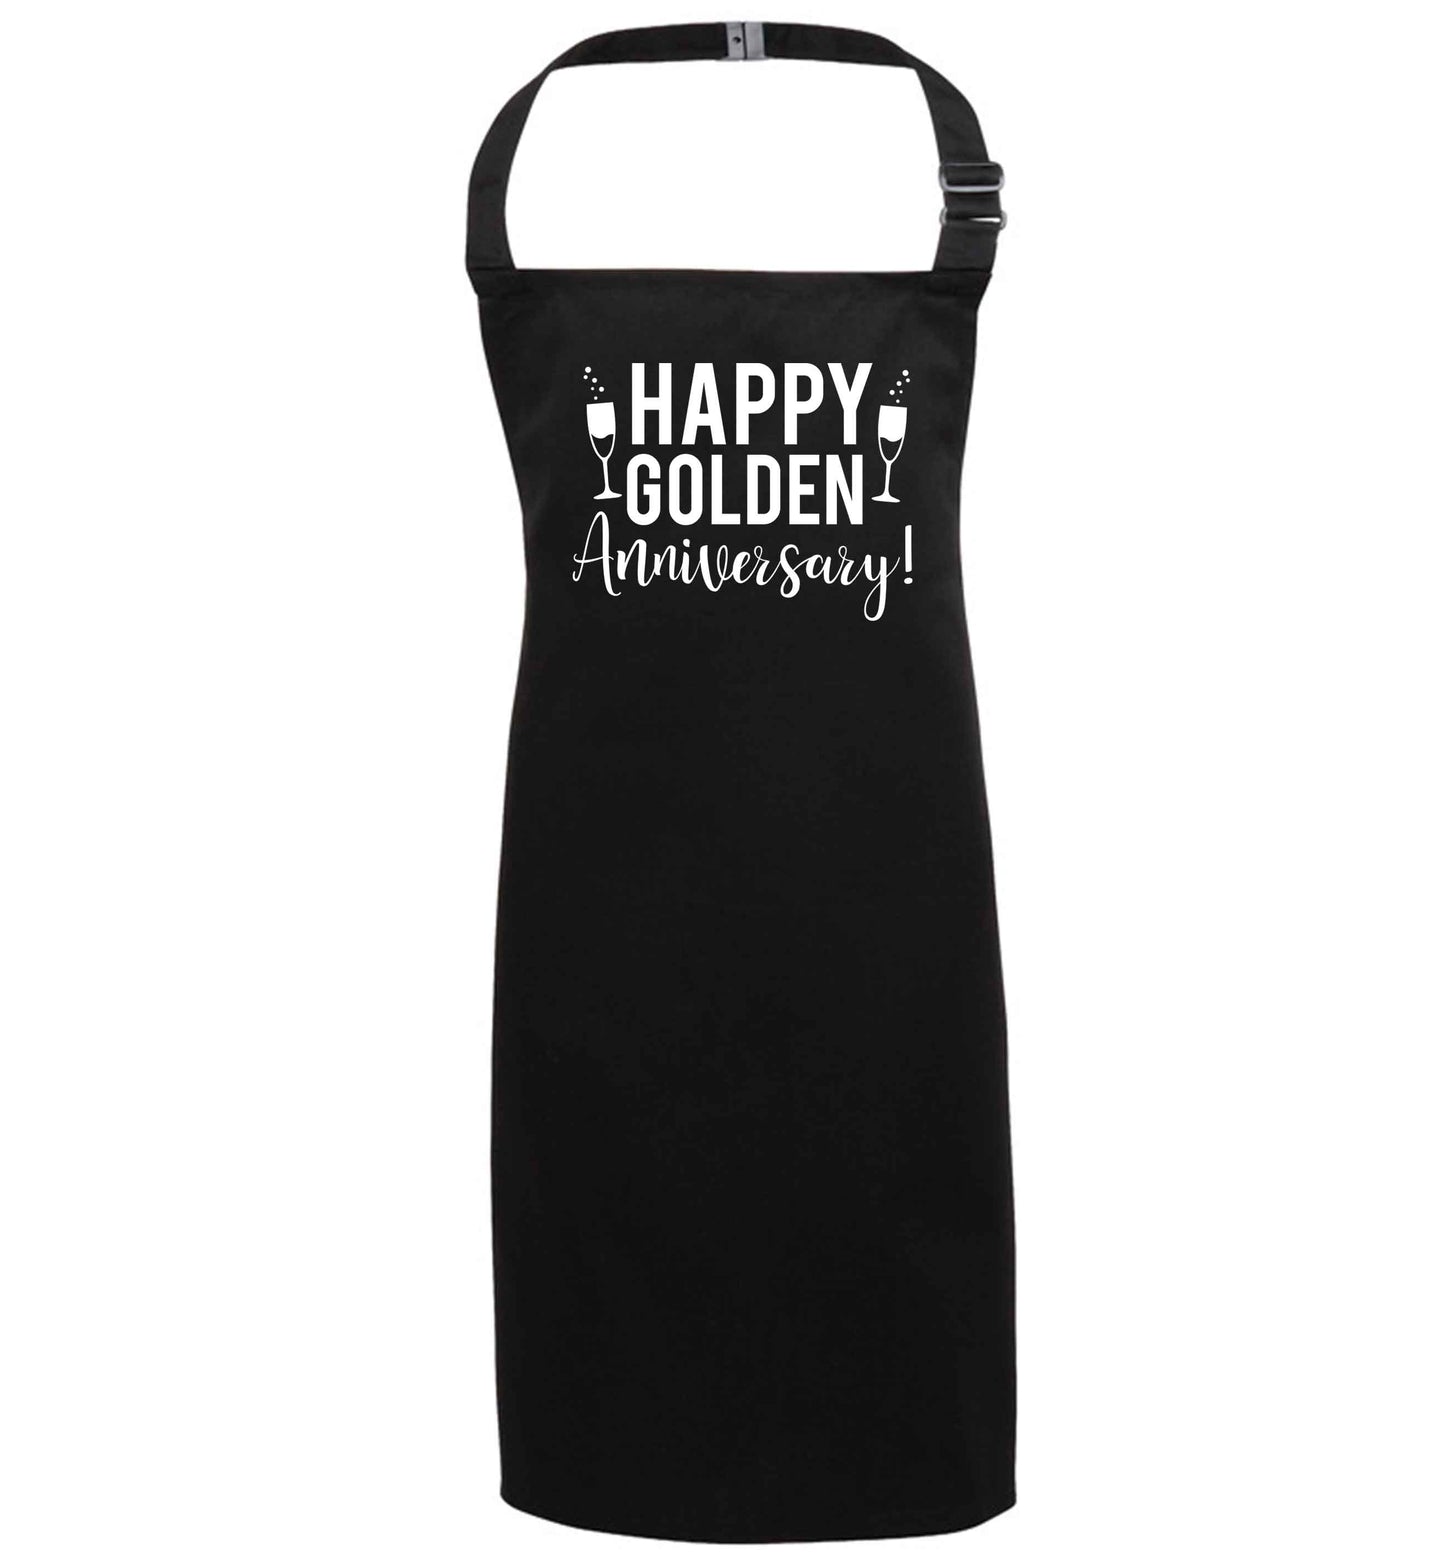 Happy golden anniversary! black apron 7-10 years